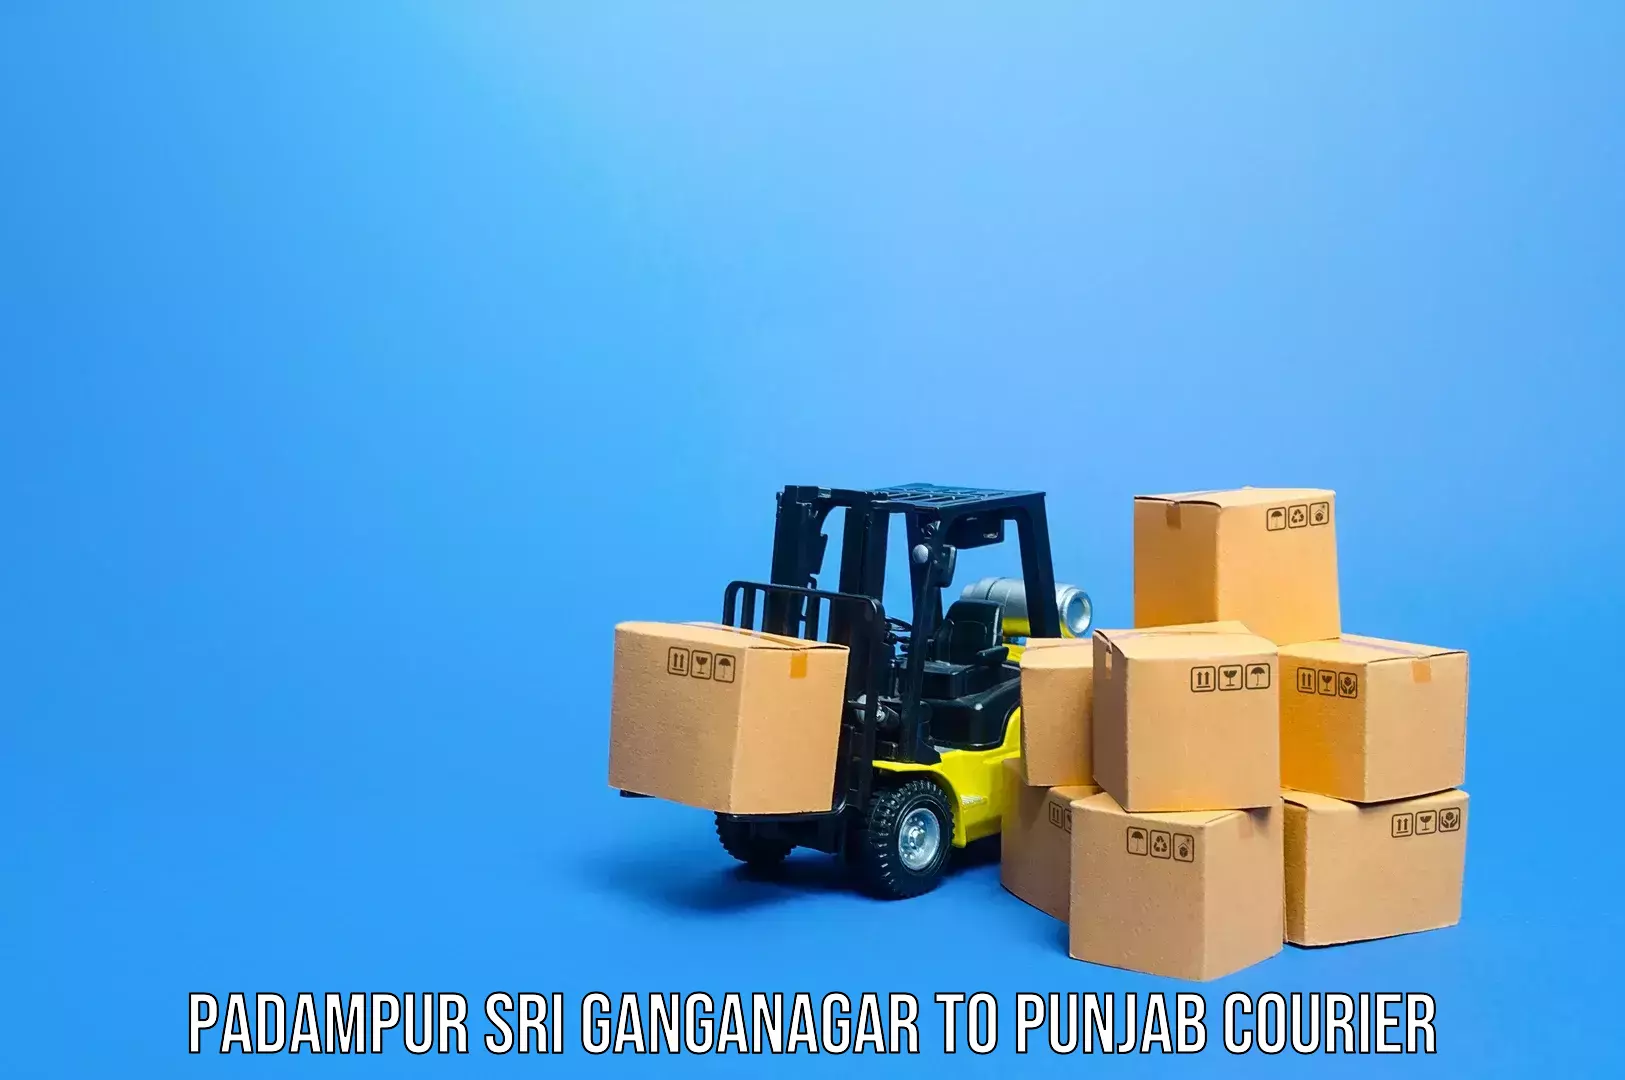 Luggage transport operations Padampur Sri Ganganagar to Amritsar